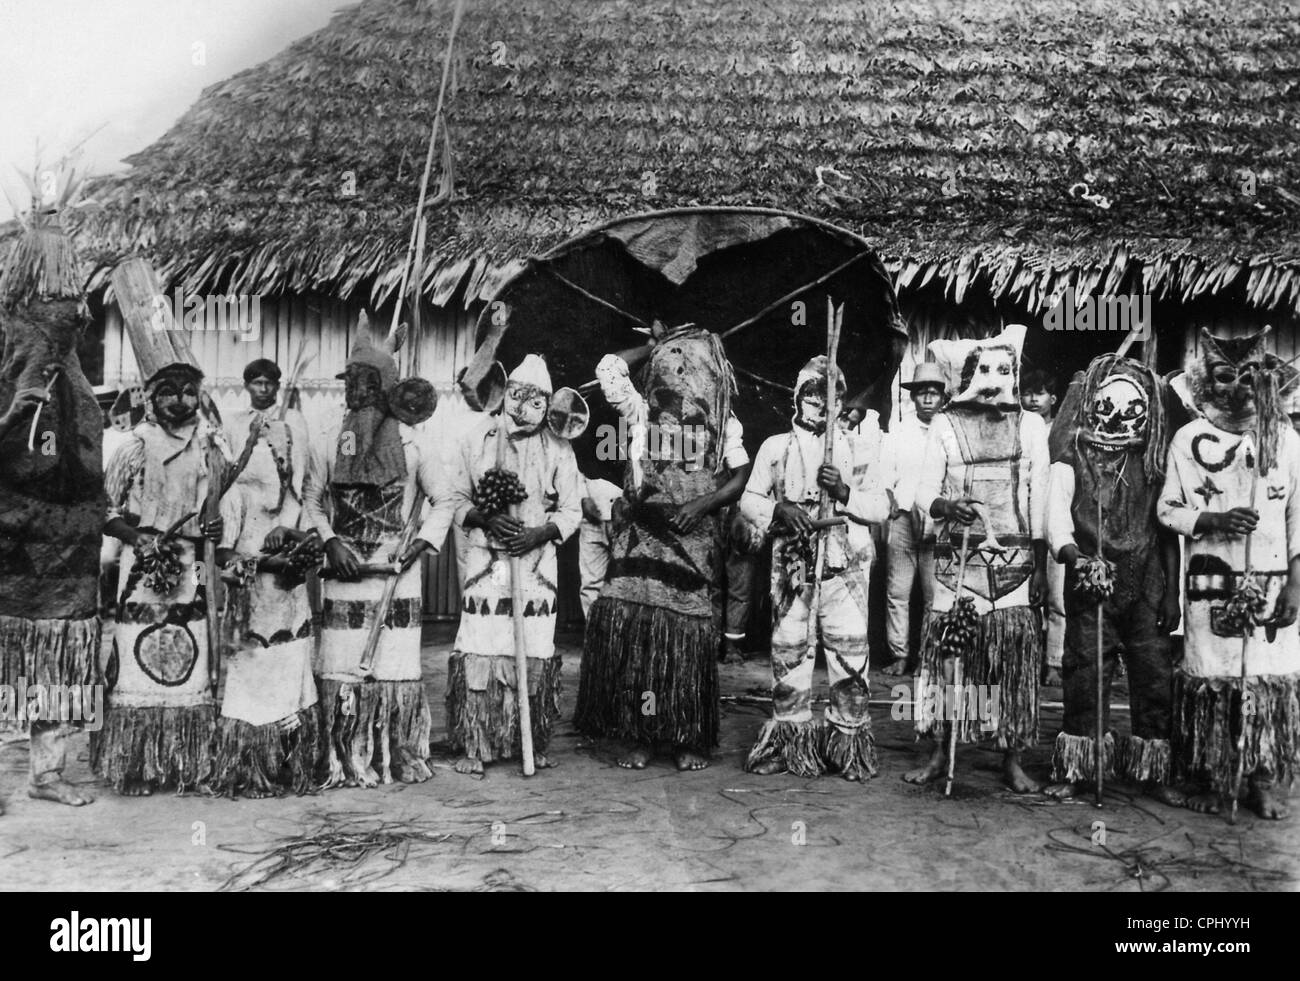 Indios Ticuna con maschere Foto stock - Alamy